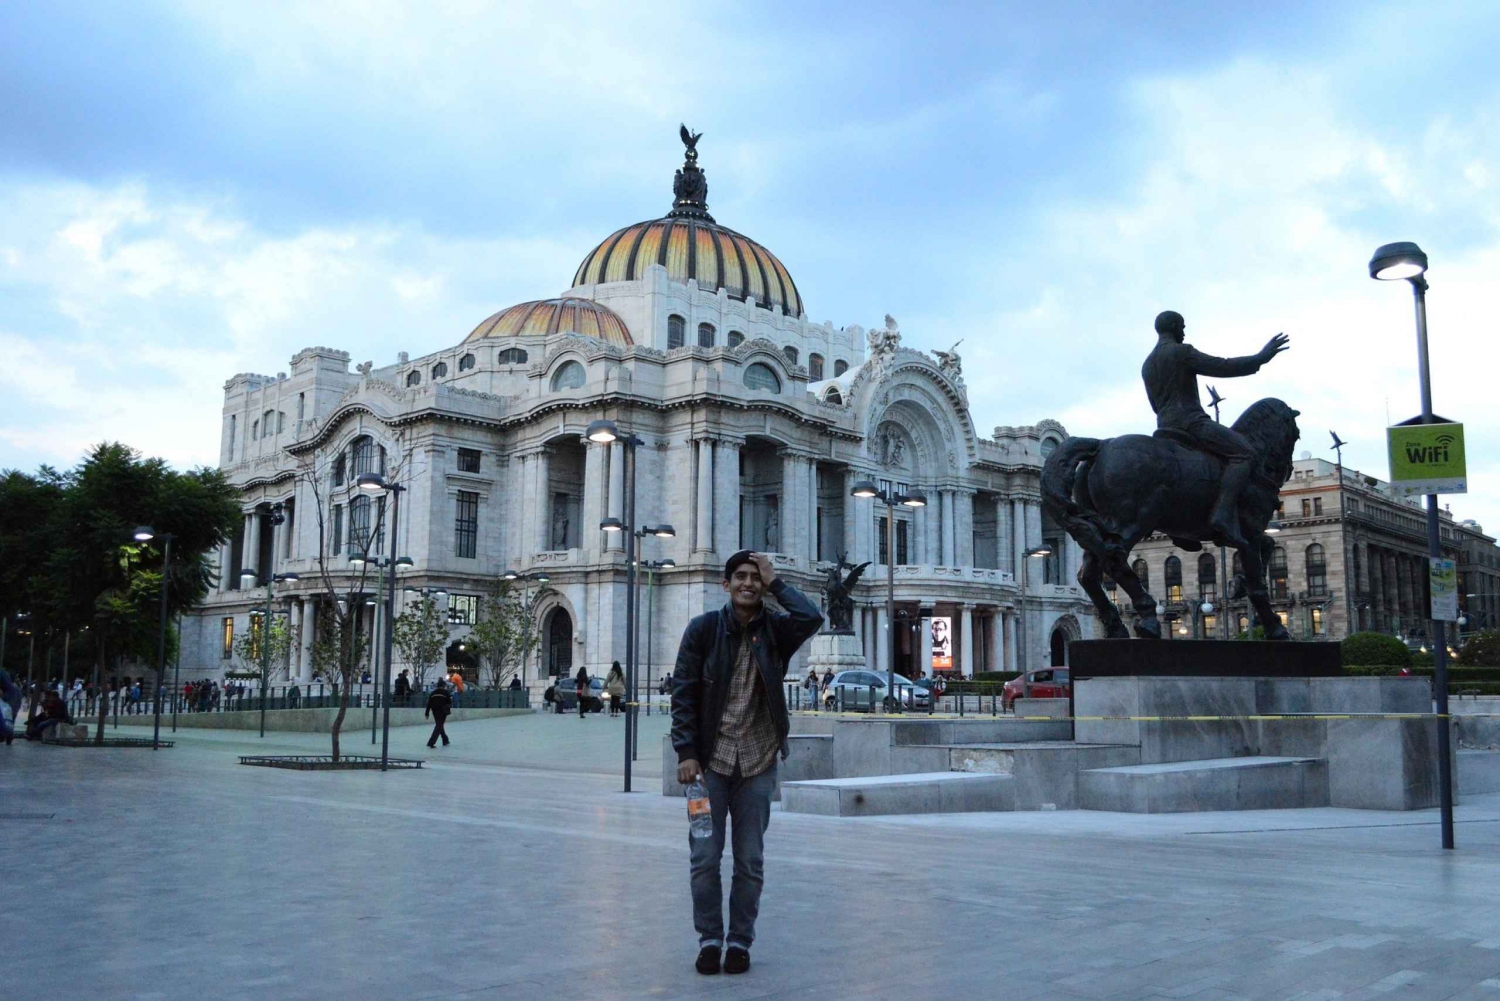 Mexico City: Palaces & Historical Buildings Walking Tour